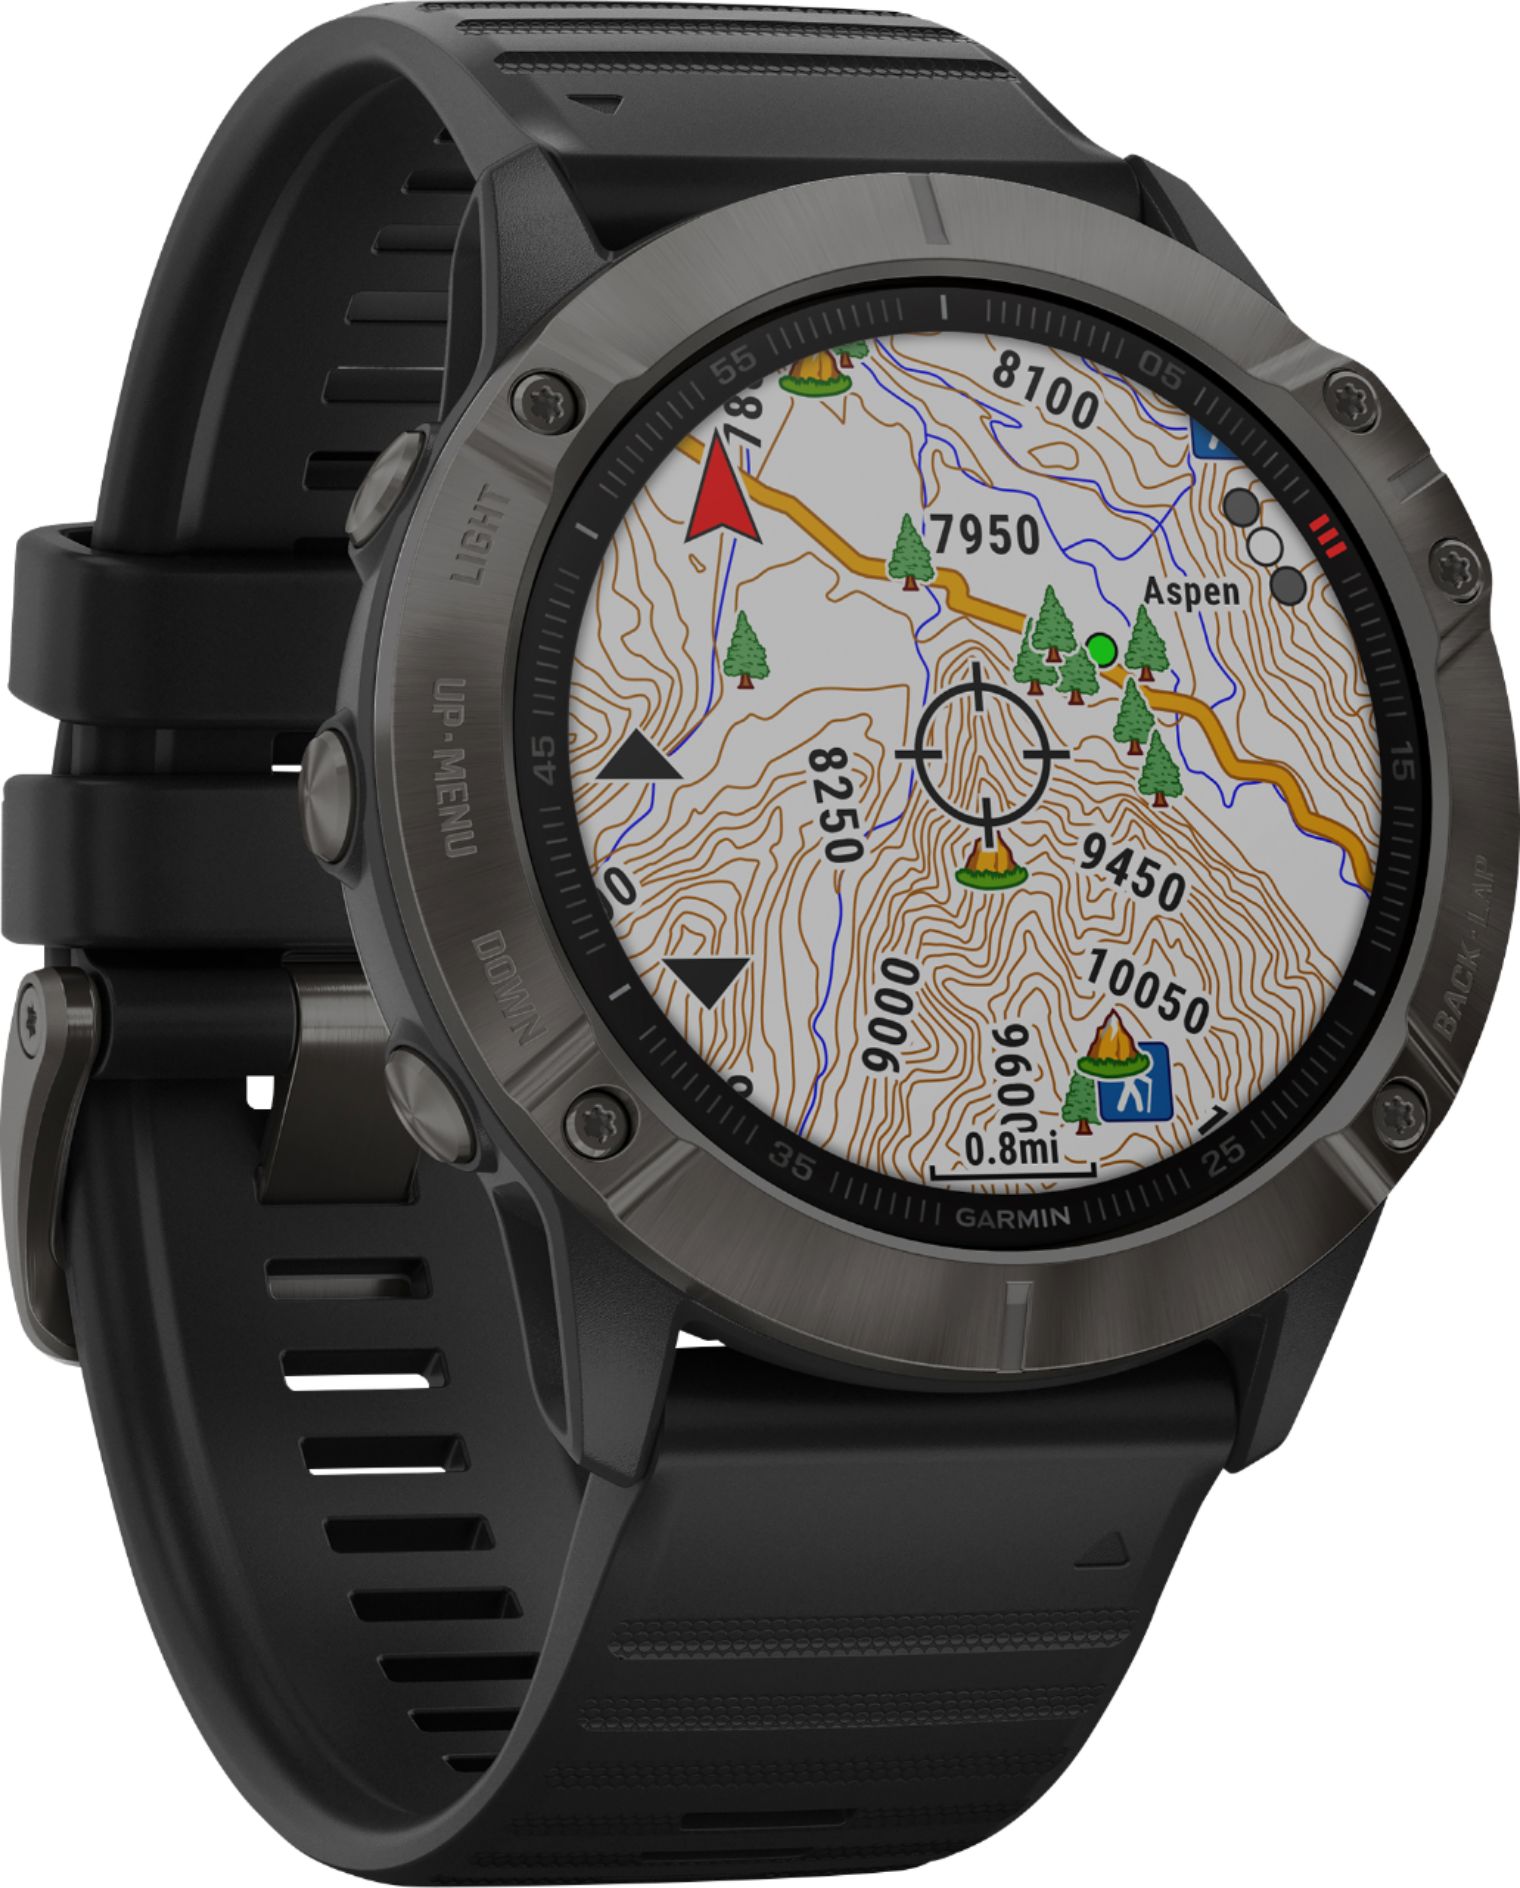 Angle View: Garmin - fēnix 6X Sapphire GPS Smartwatch 51mm Fiber-Reinforced Polymer - Black